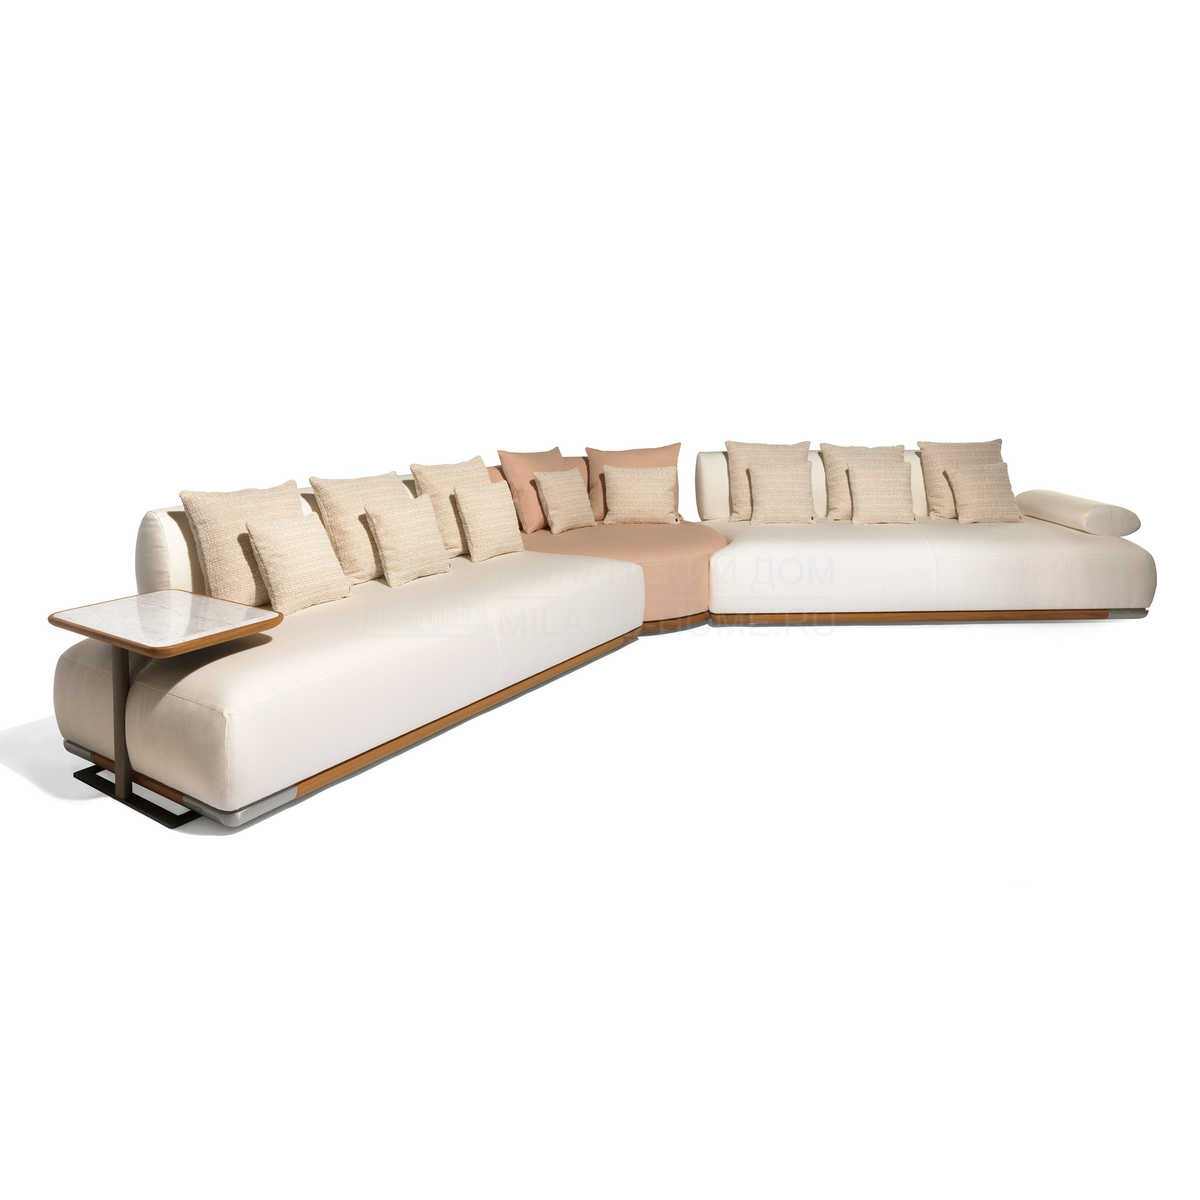 Модульный диван Ilario sofa из Италии фабрики IPE CAVALLI VISIONNAIRE